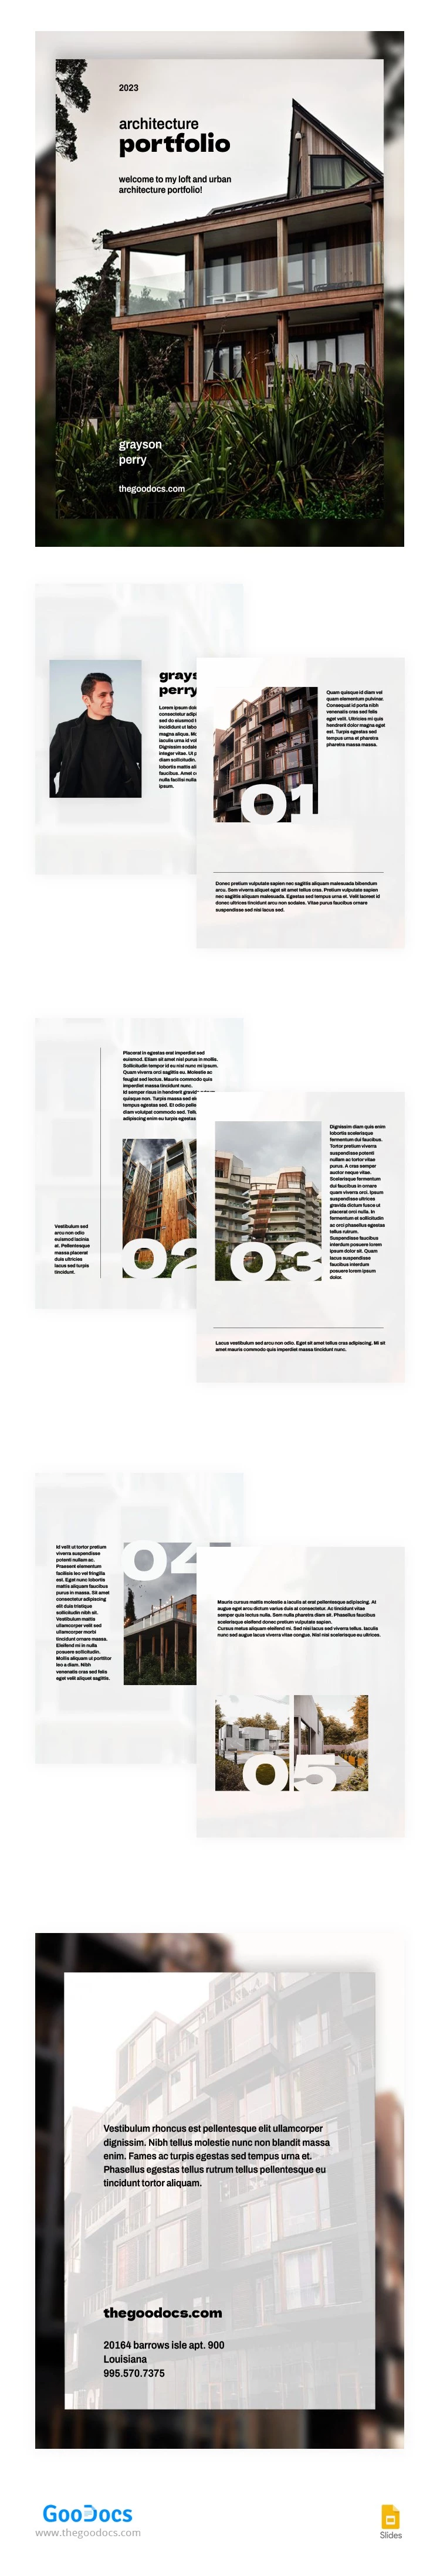 Urban Architecture Portfolio - free Google Docs Template - 10066170